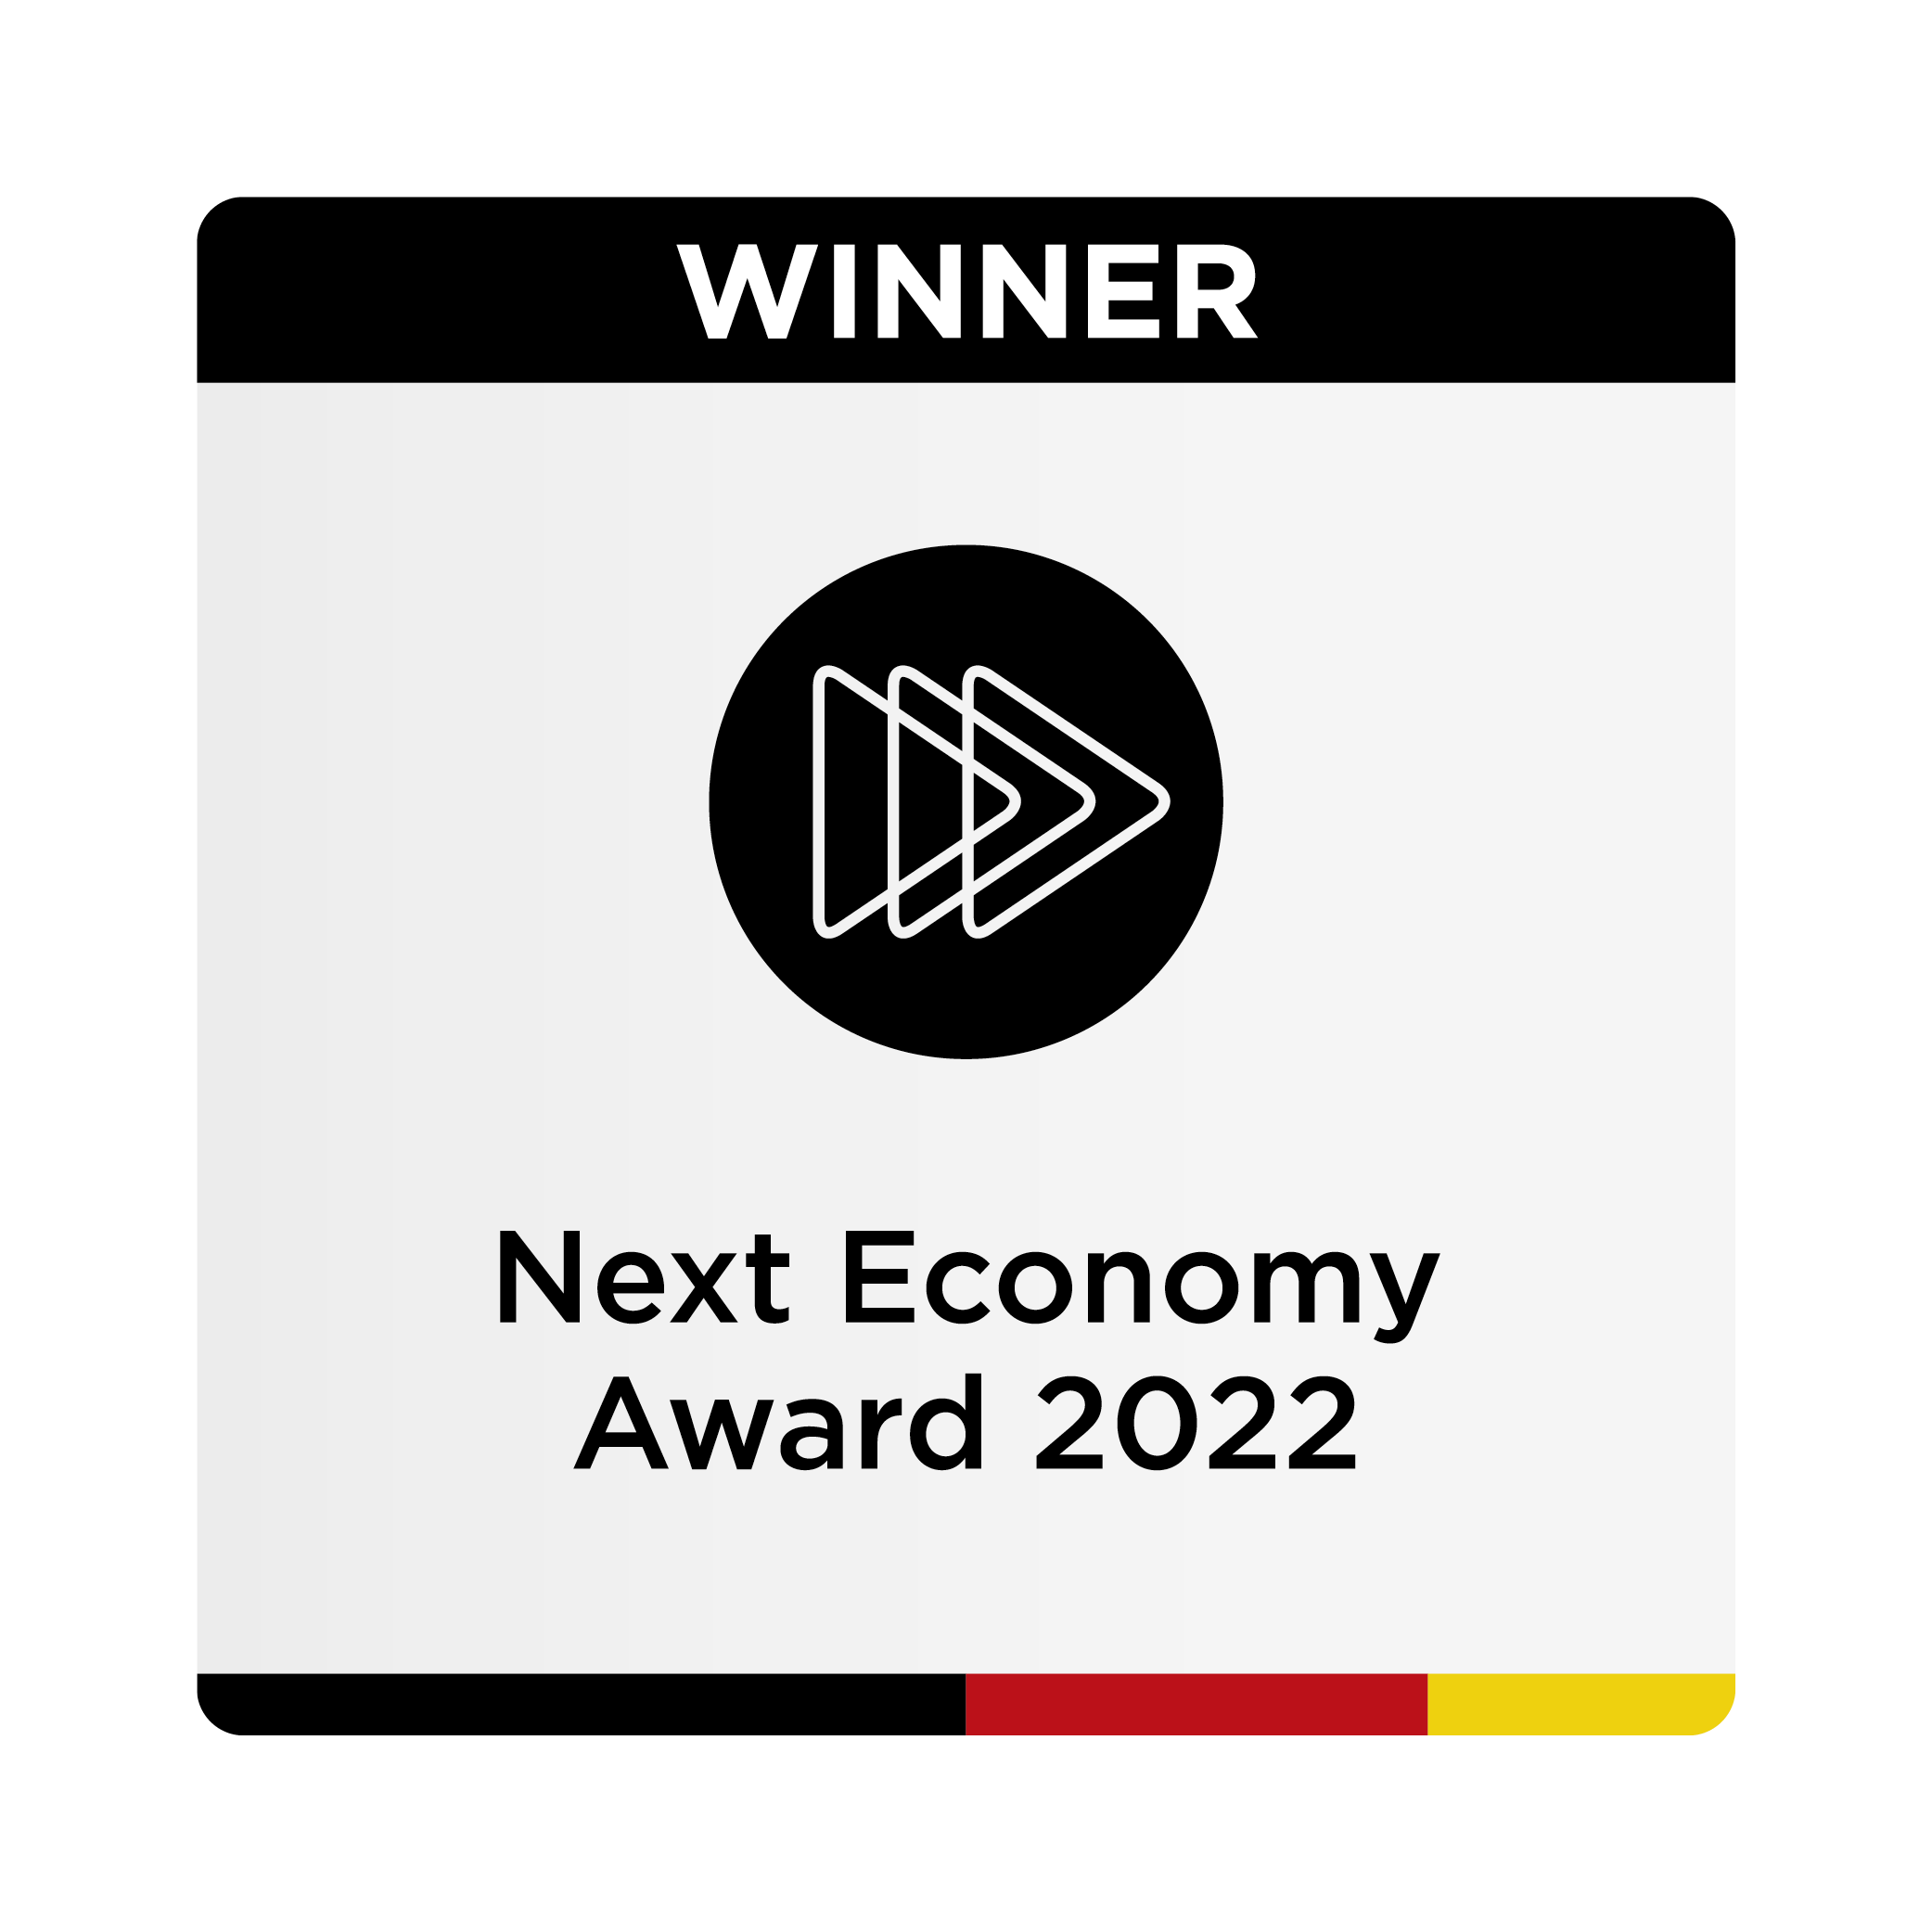 Next Economy Award 2022